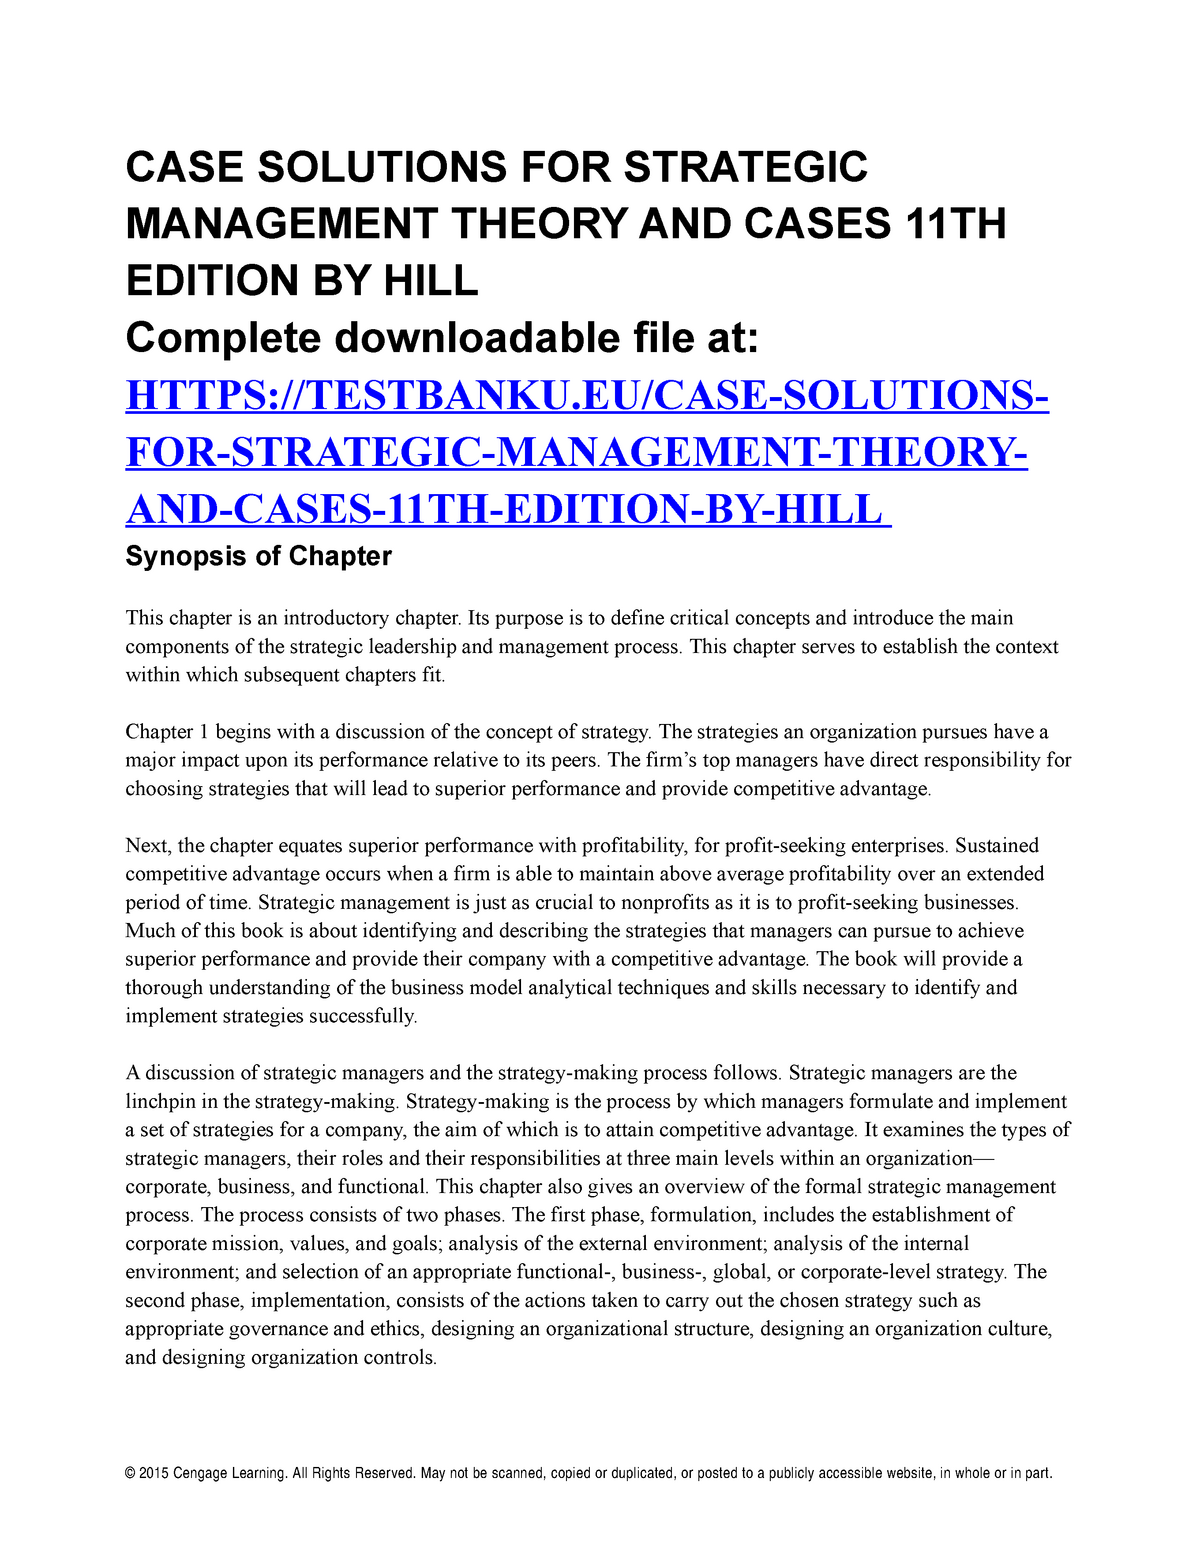 case study in strategic management